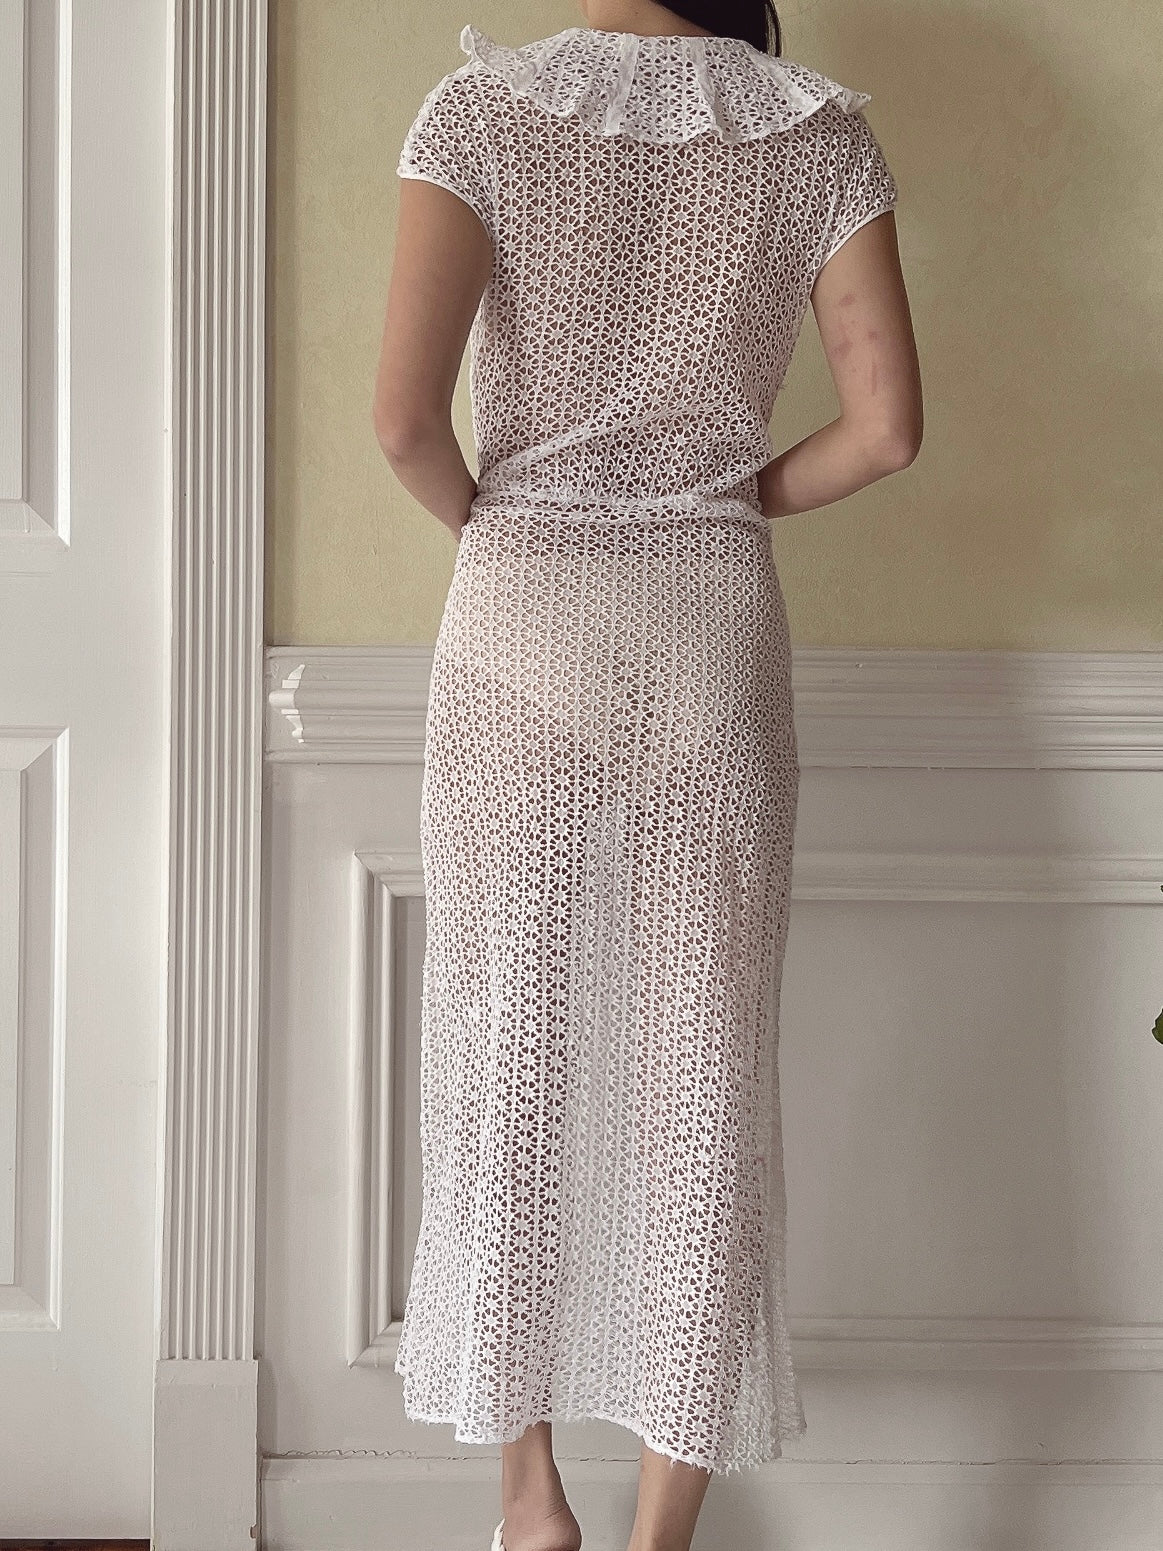 1940s Cotton Eyelet Dress - S